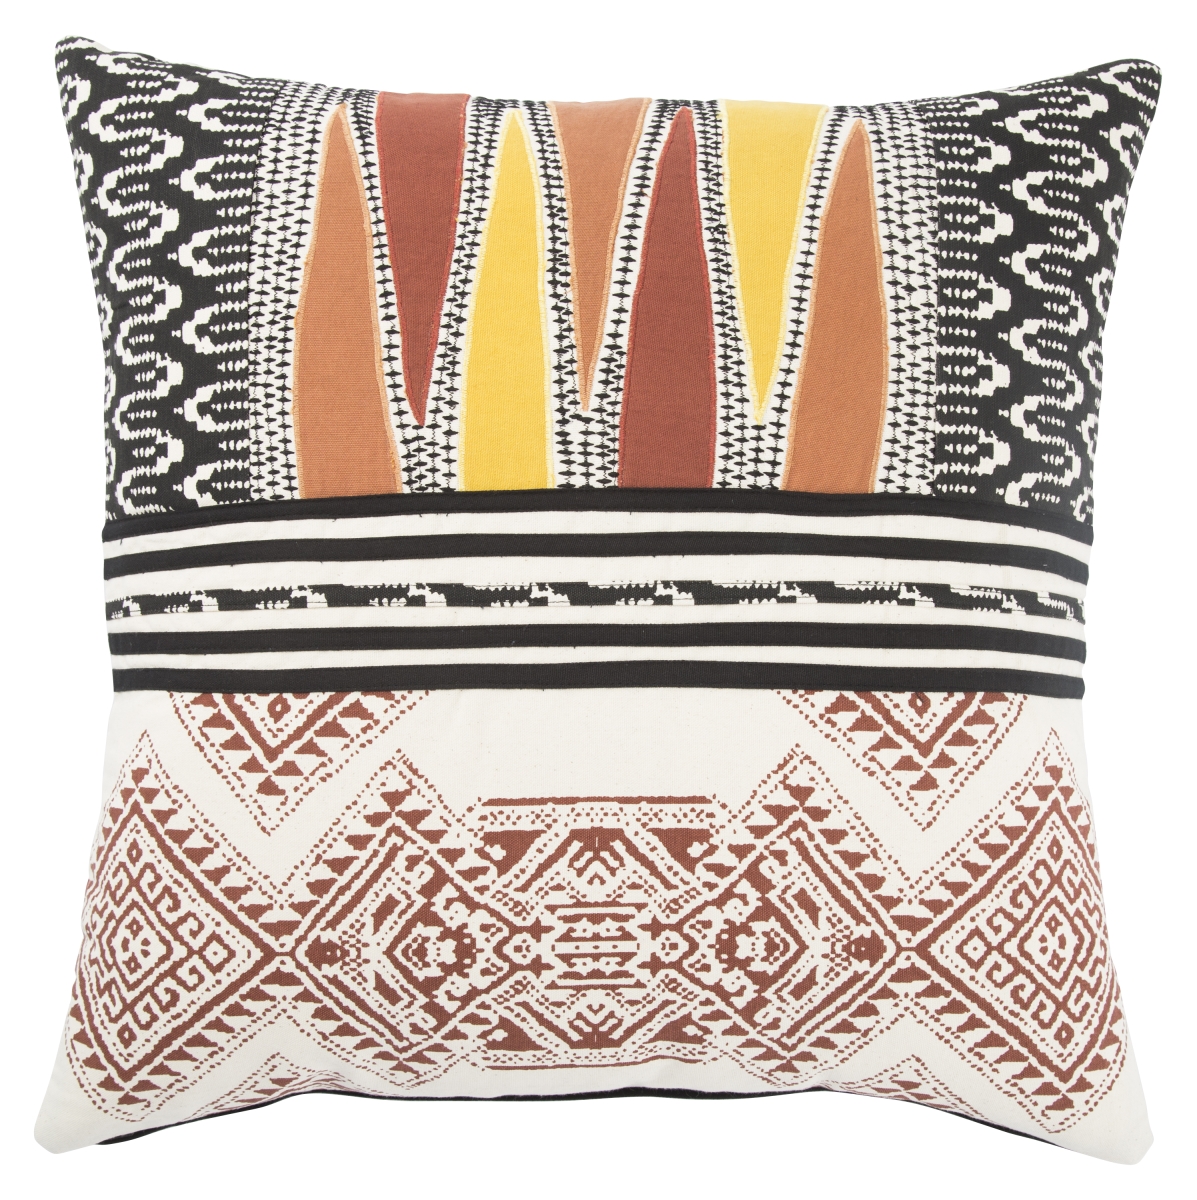 Plw102389 22 X 22 In. Traditions Made Modern Pillows Museum Ifa Mesa Orange & Black Geometric Down Throw Pillow